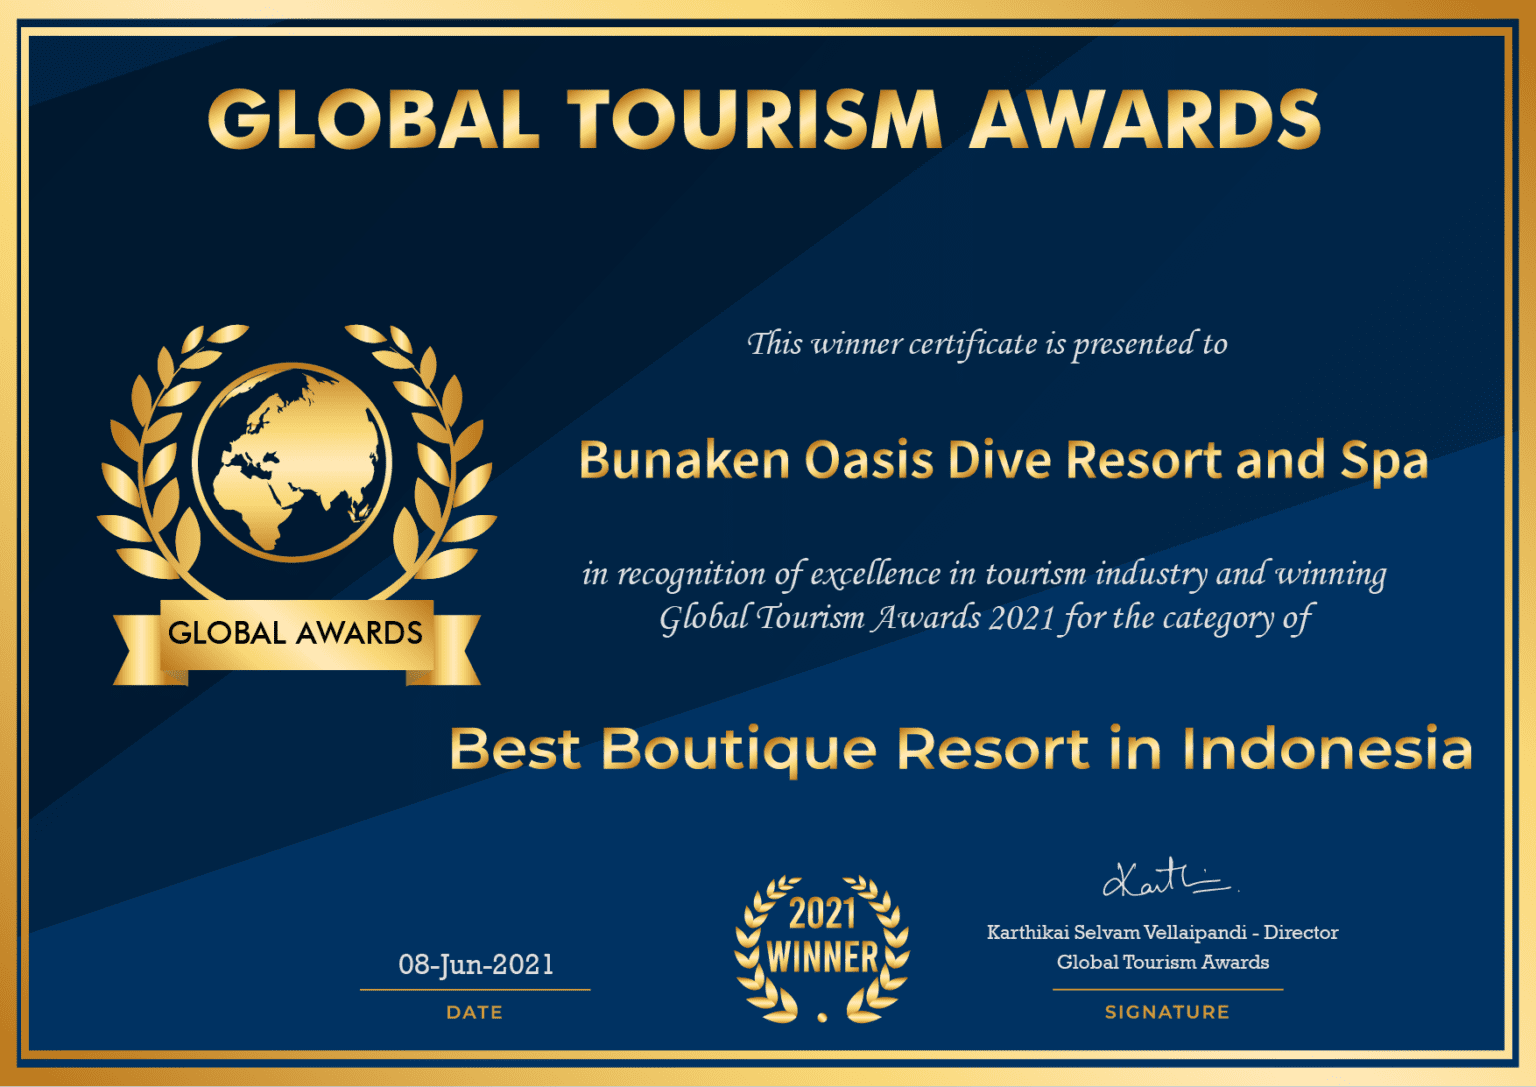 Global Tourism Awards winner certificate